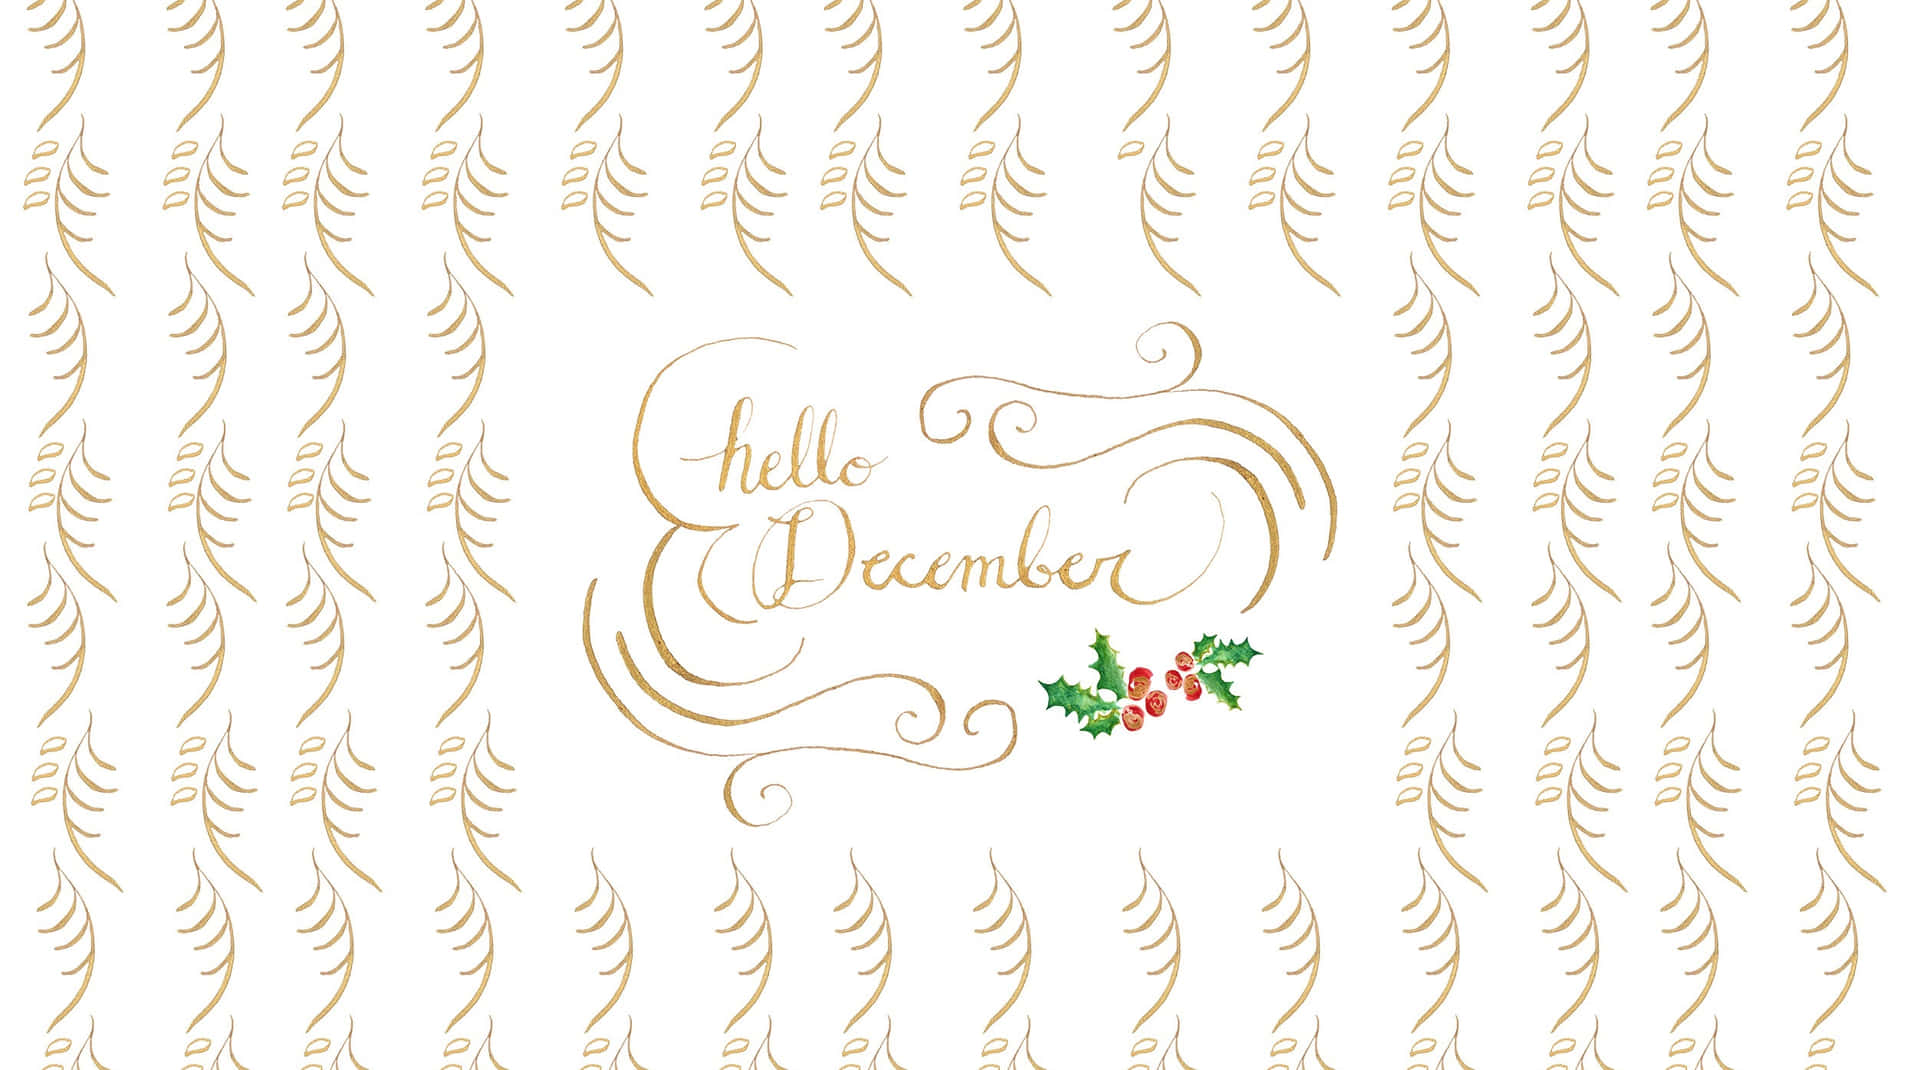 Hello December Greeting Background Wallpaper